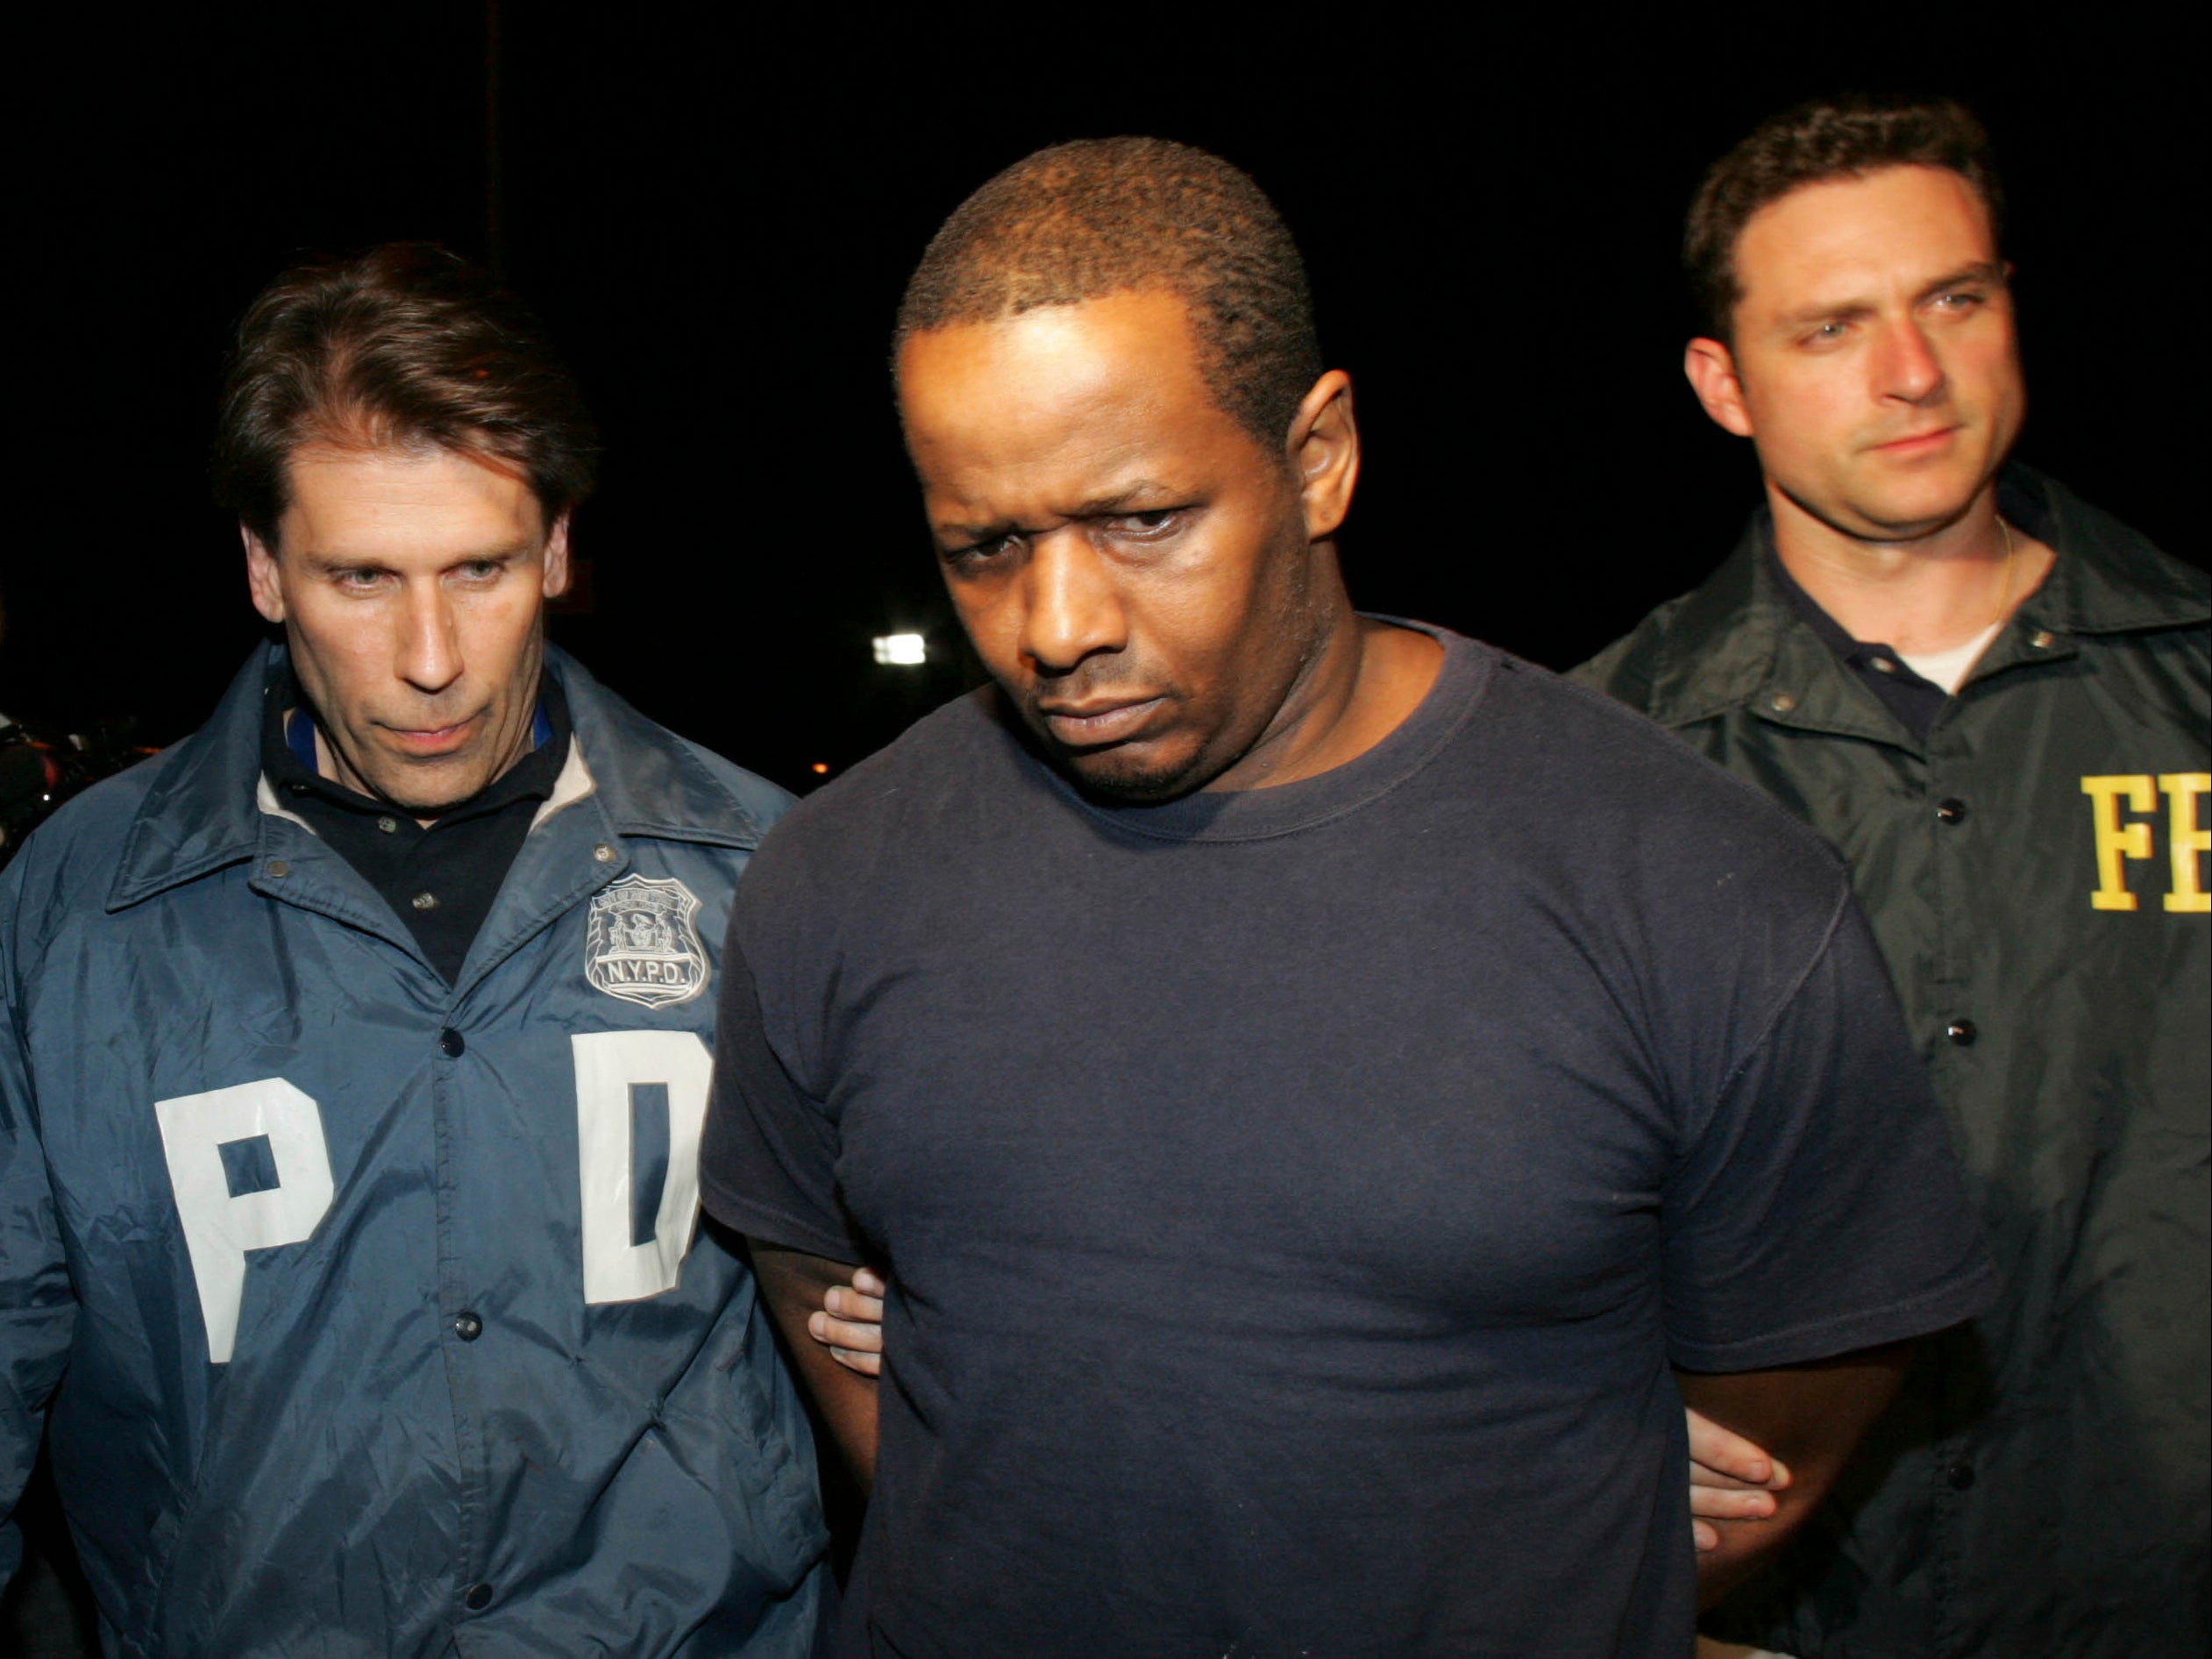 James Cromitie after his arrest in May 2009